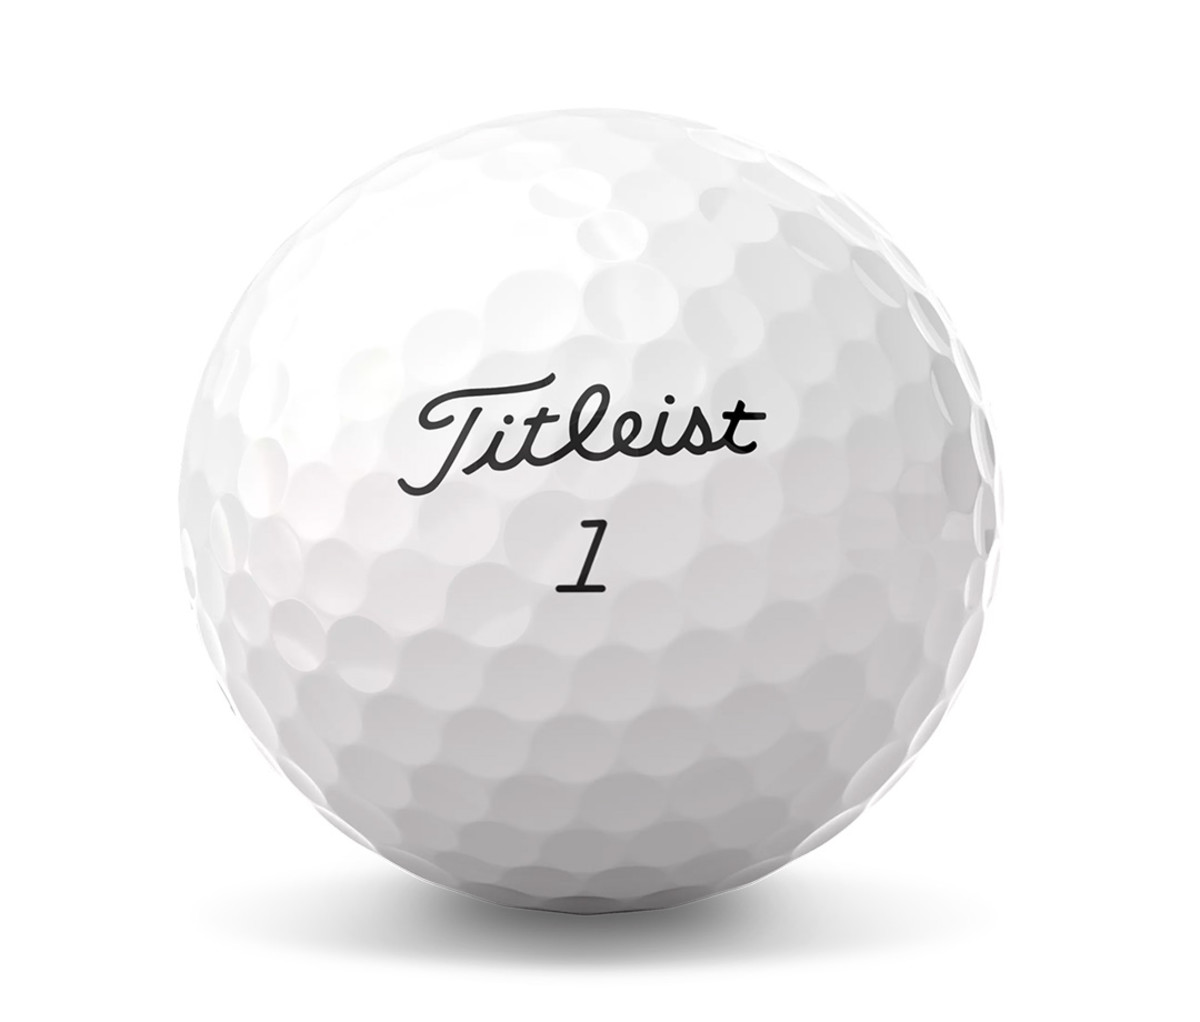 https://www.mensjournal.com/.image/t_share/MjAxNzQ2NTM4MDY0NjUxOTE5/golf-gifts-titleist-prov1-golf-balls.jpg